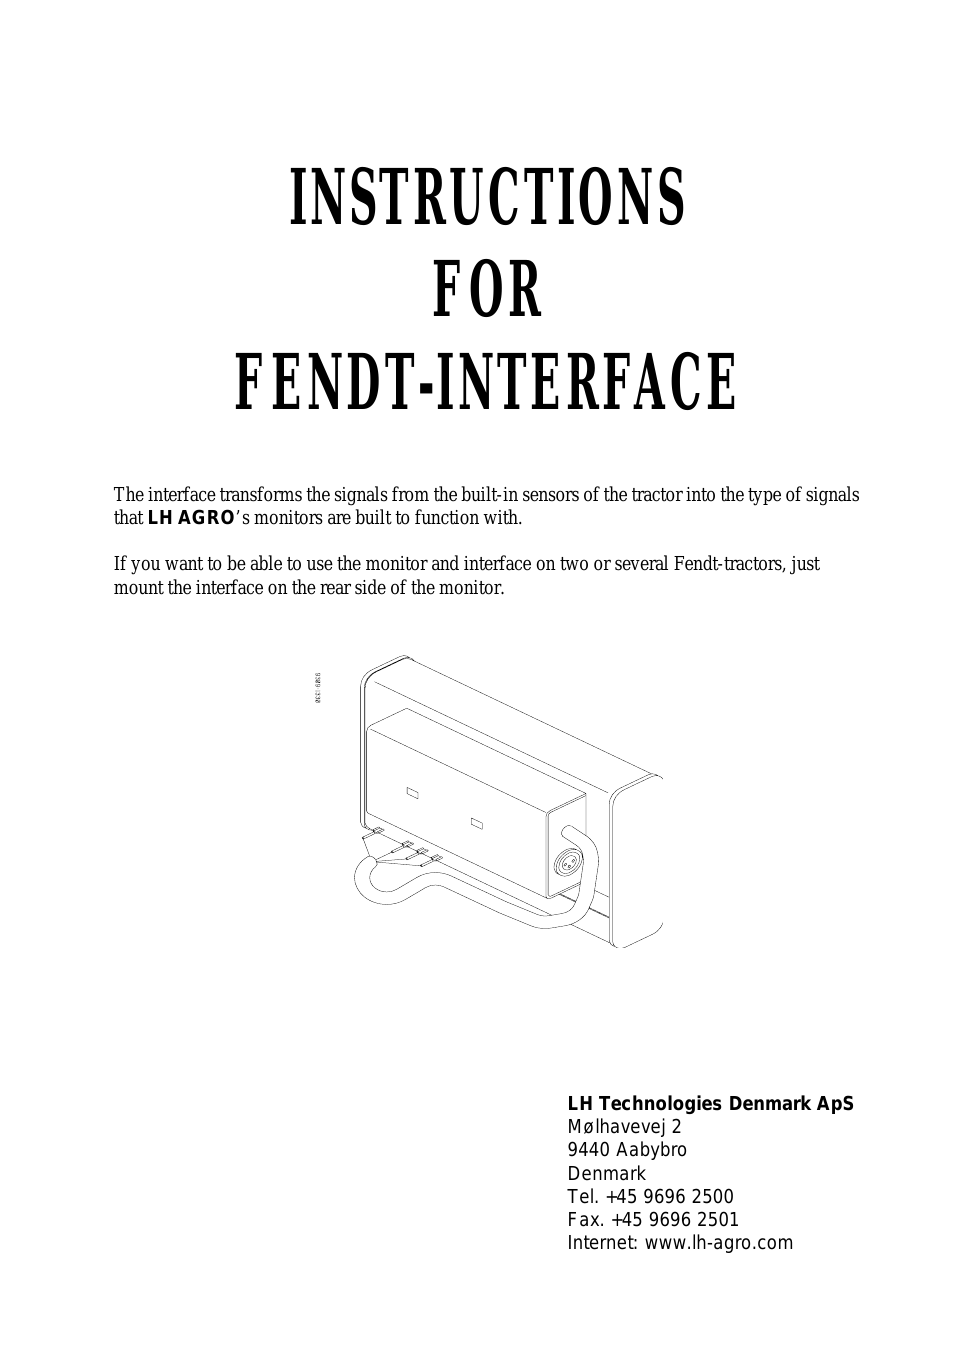 FENDT-INTERFACE